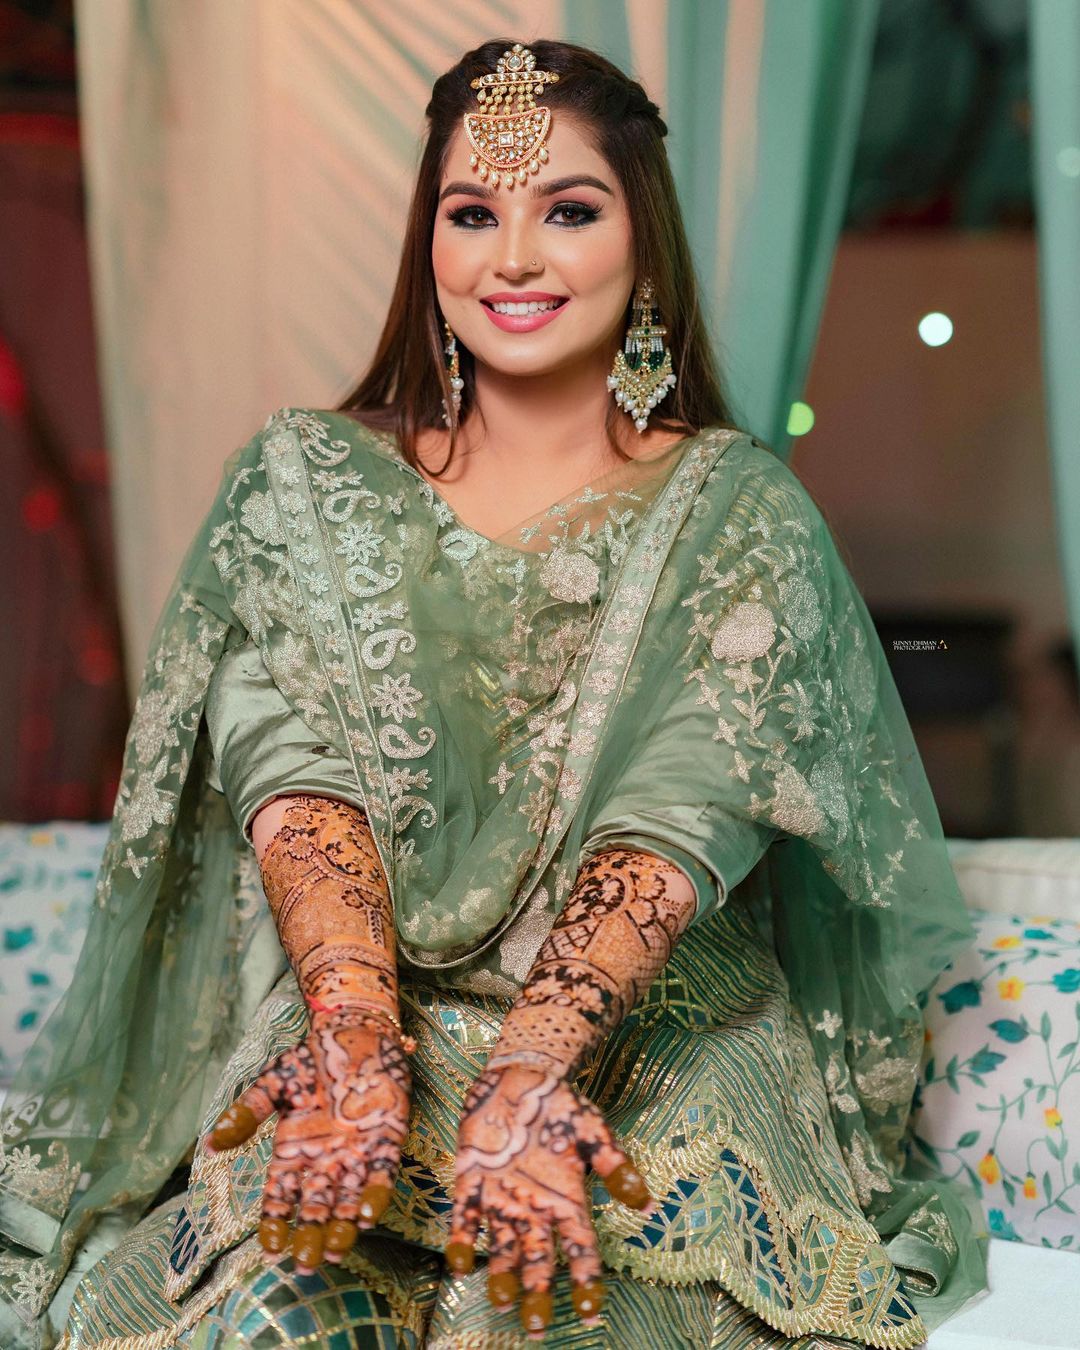 mehndi portrait with smiling bride